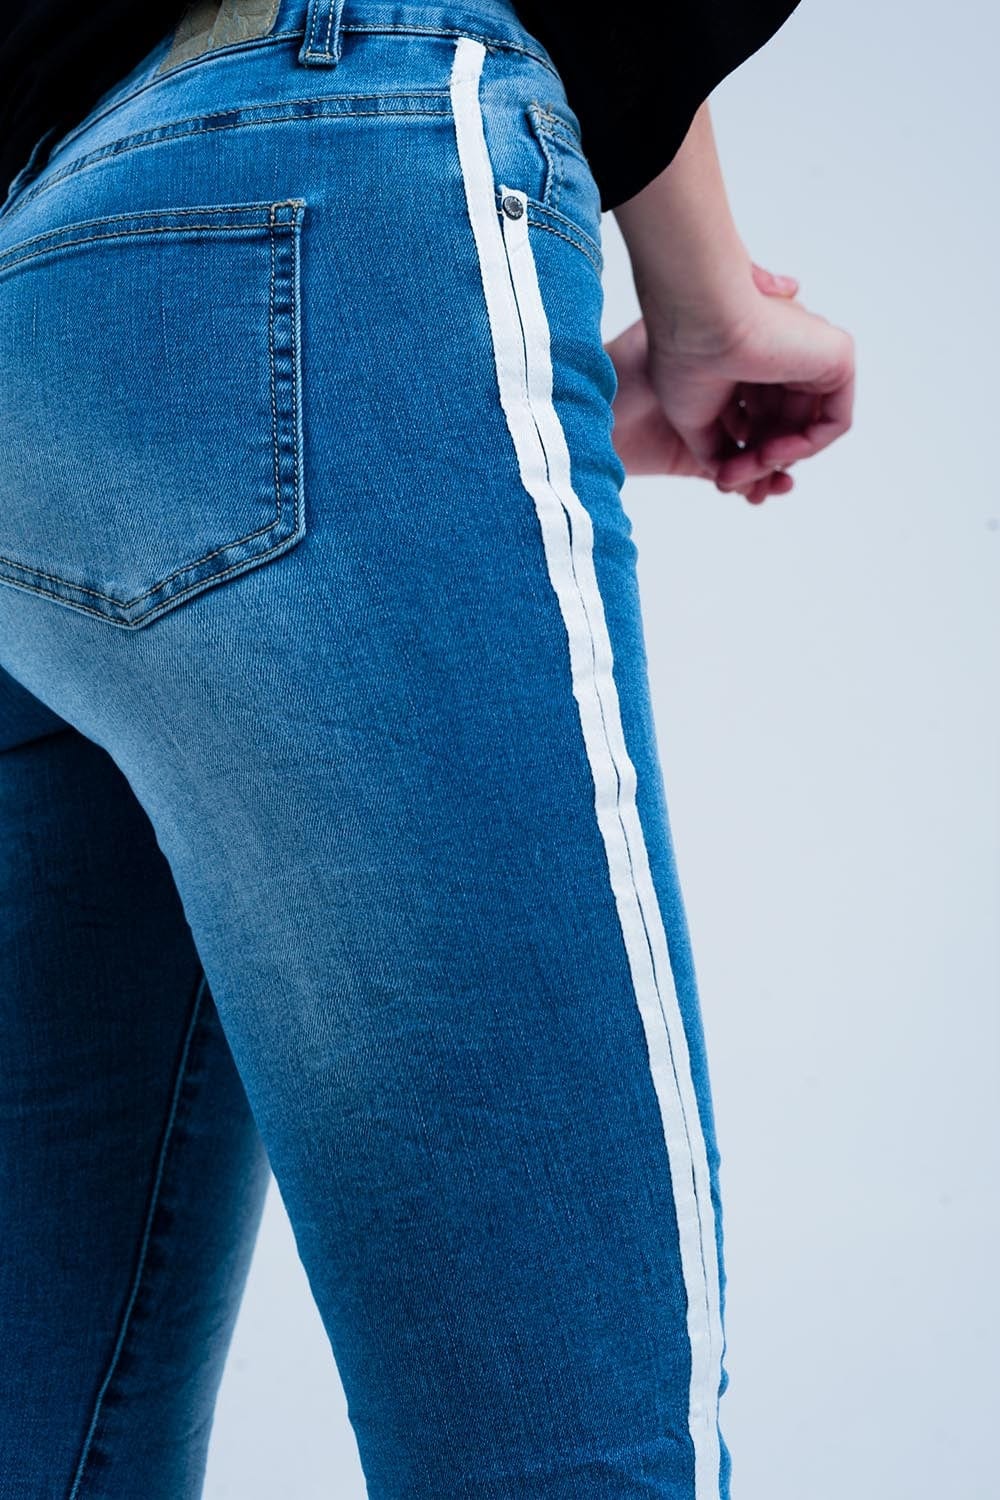 Q2 Women's Jean Skinny Jeans with White Side Stripe